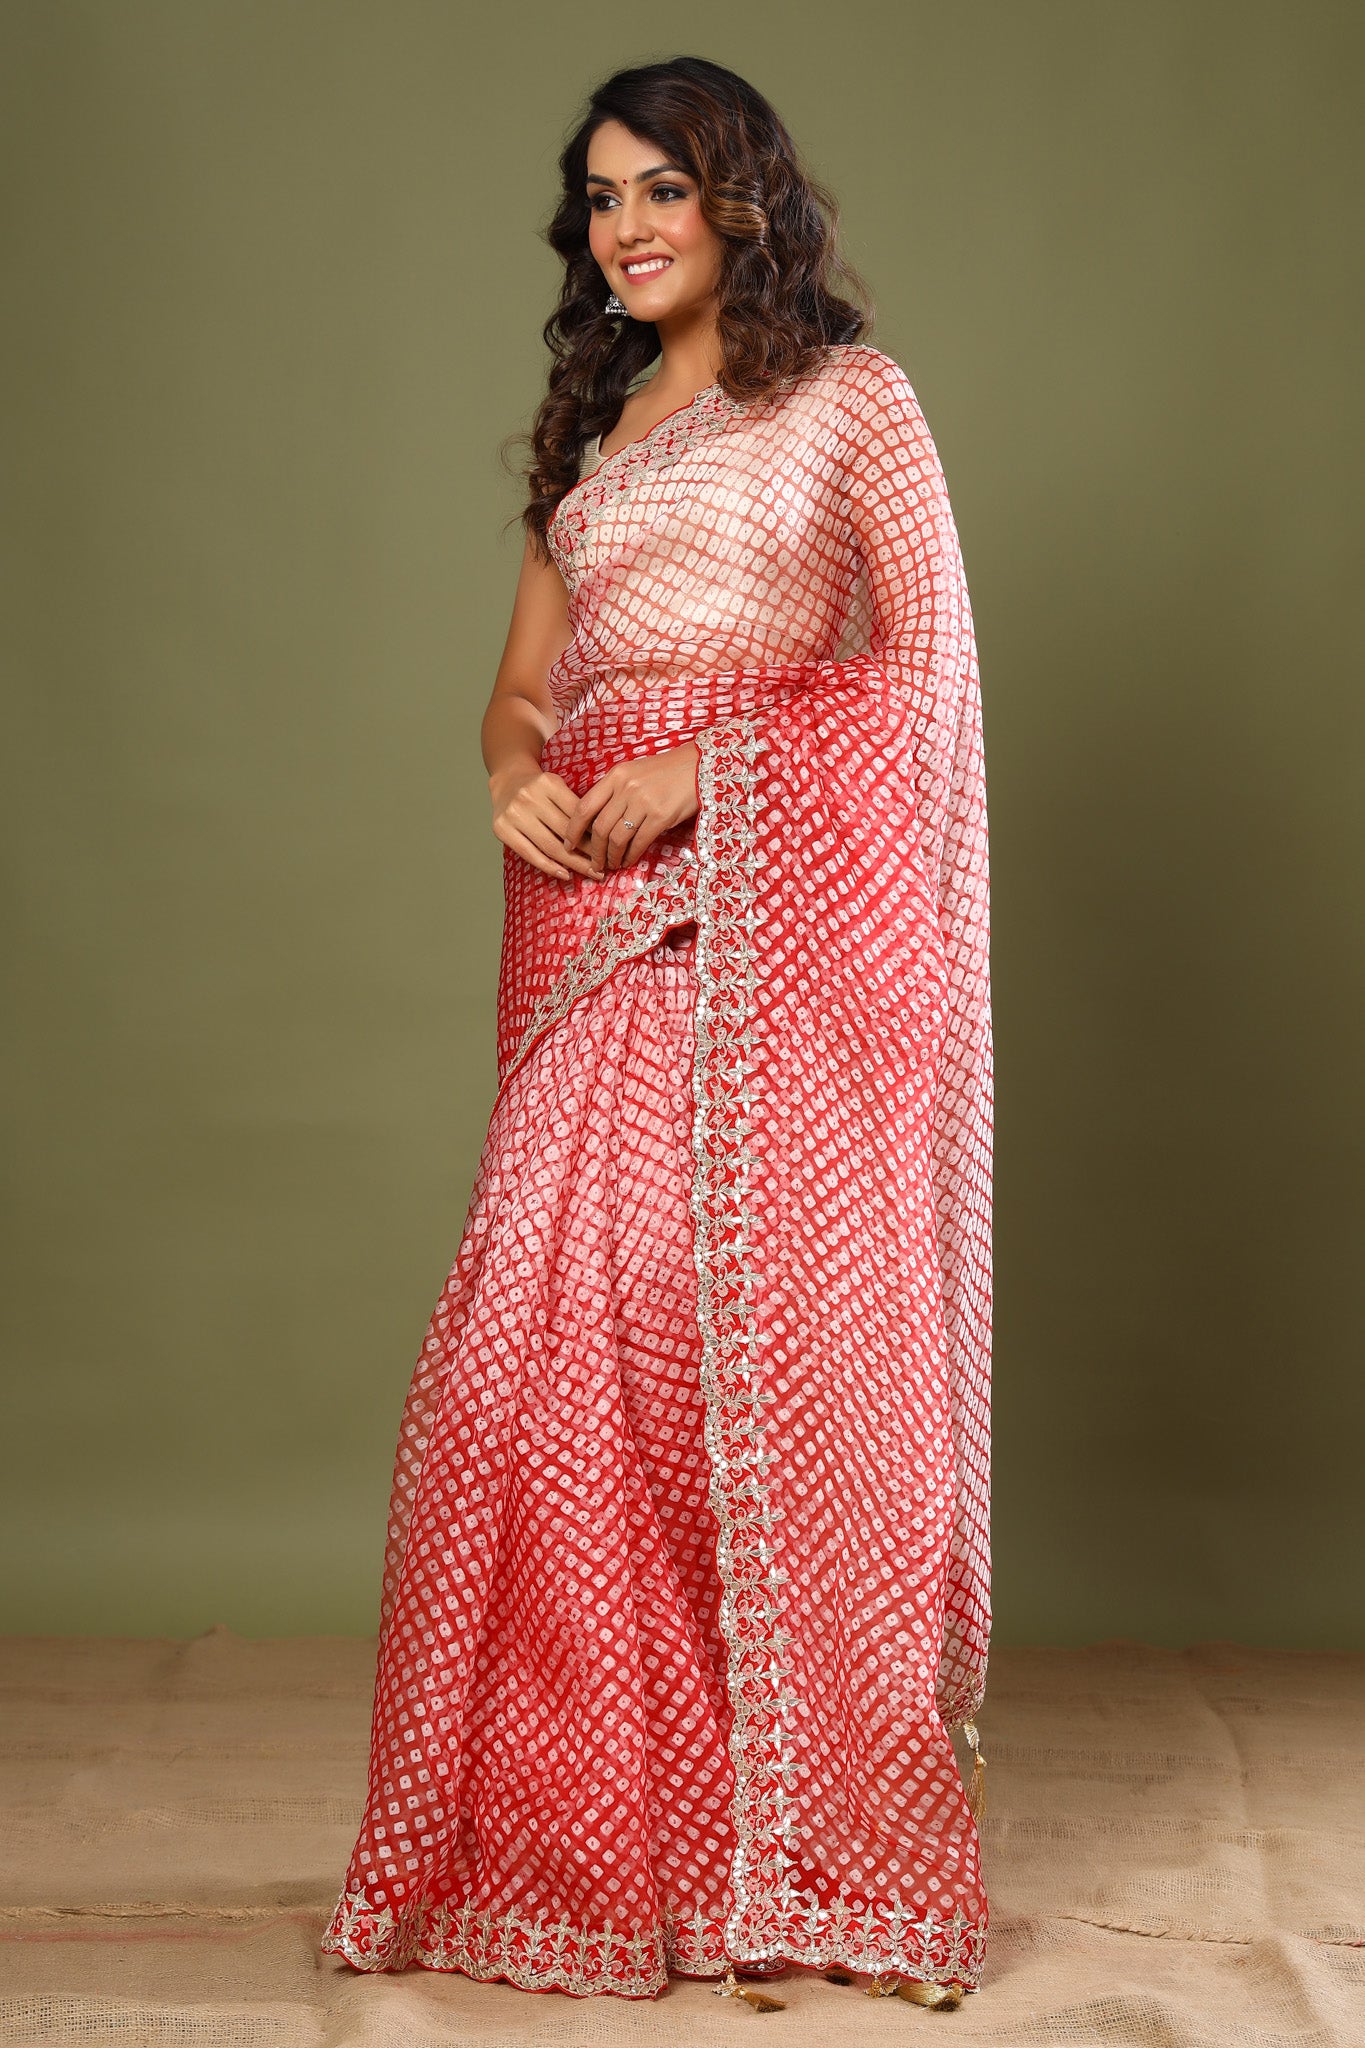 Buy Indian Wedding Sarees Online in USA - Latest Wedding Sarees